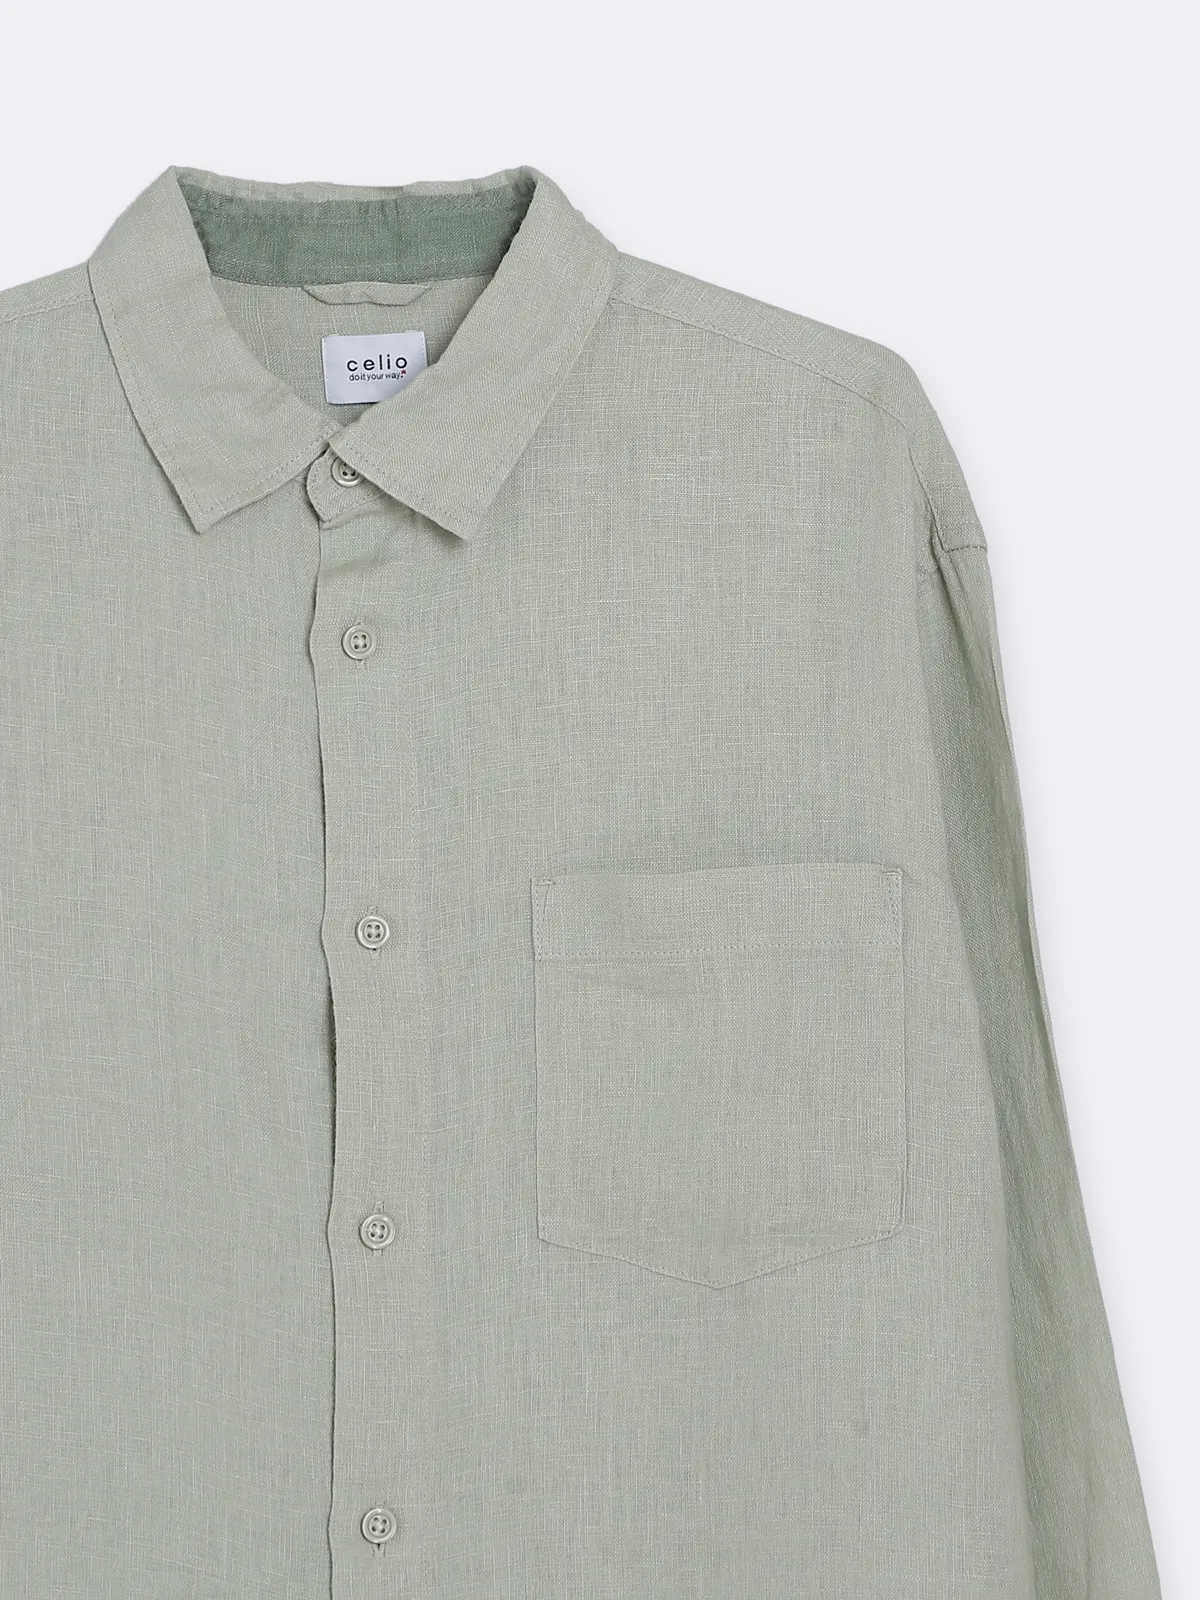 Celio sage green cotton full sleeves shirt